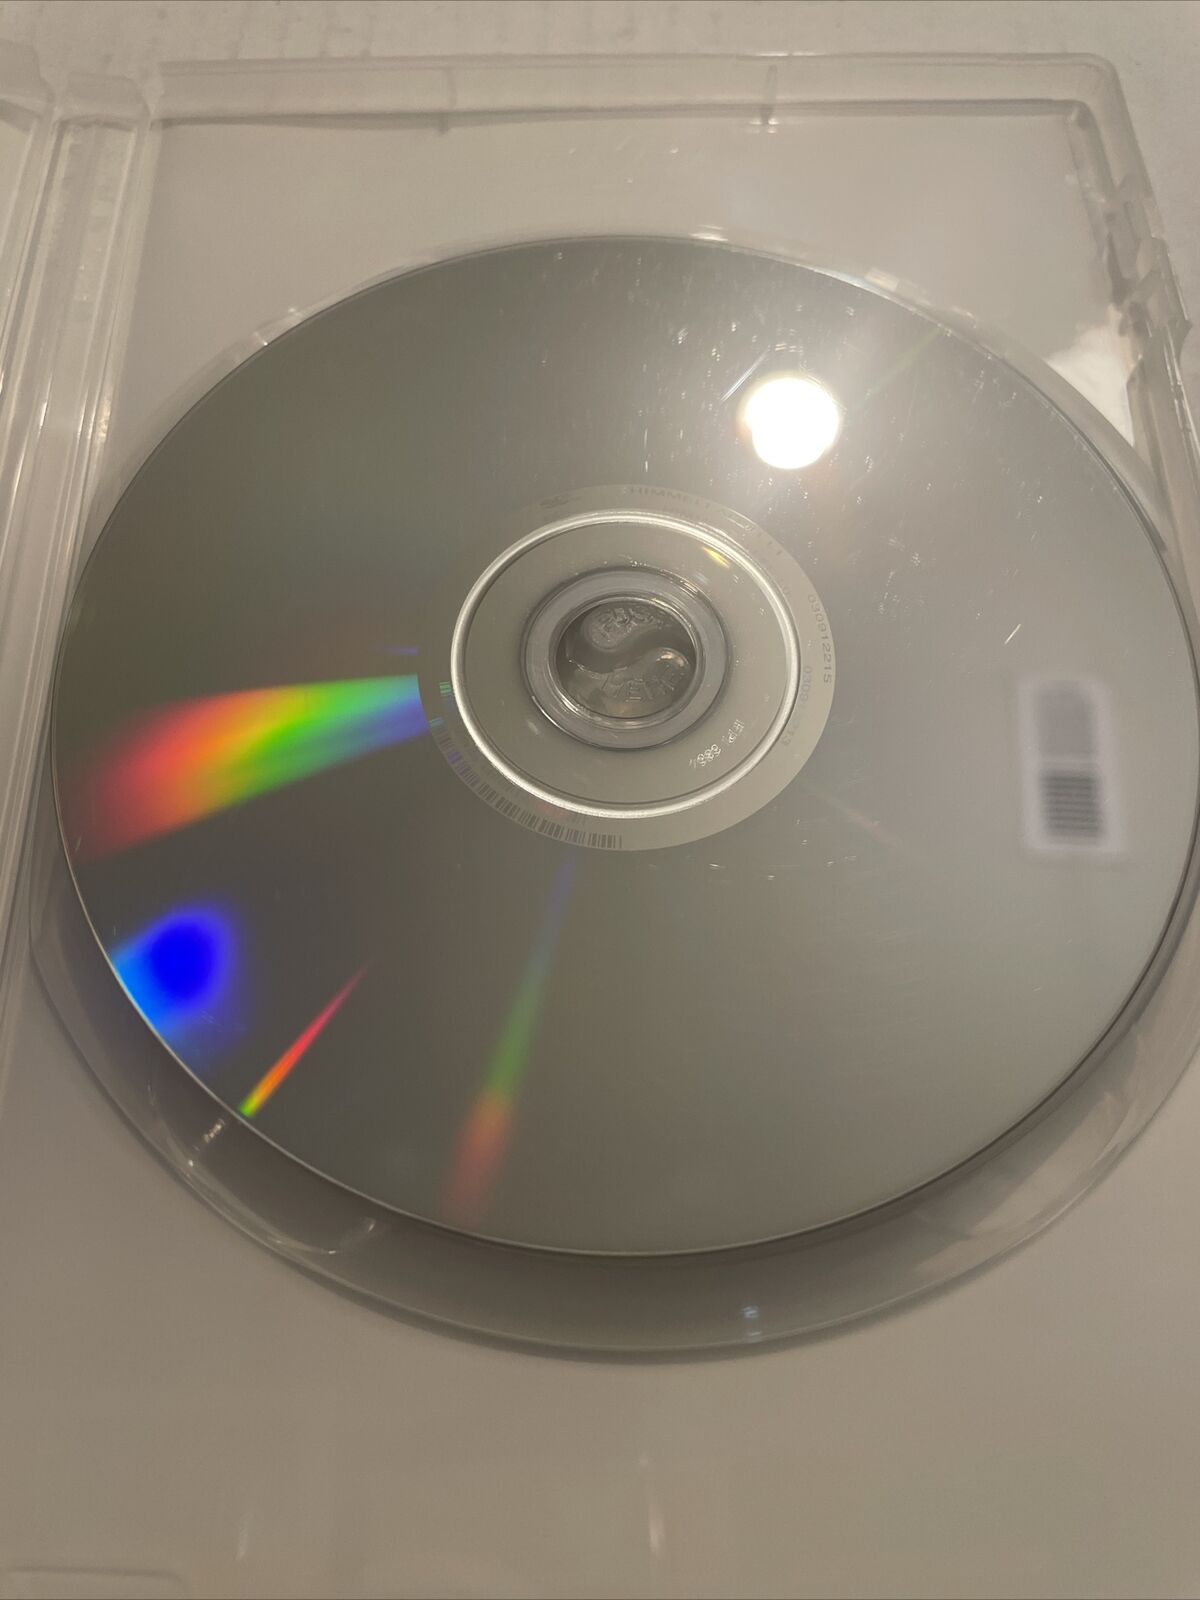 Himmelfall R2 PAL DVD